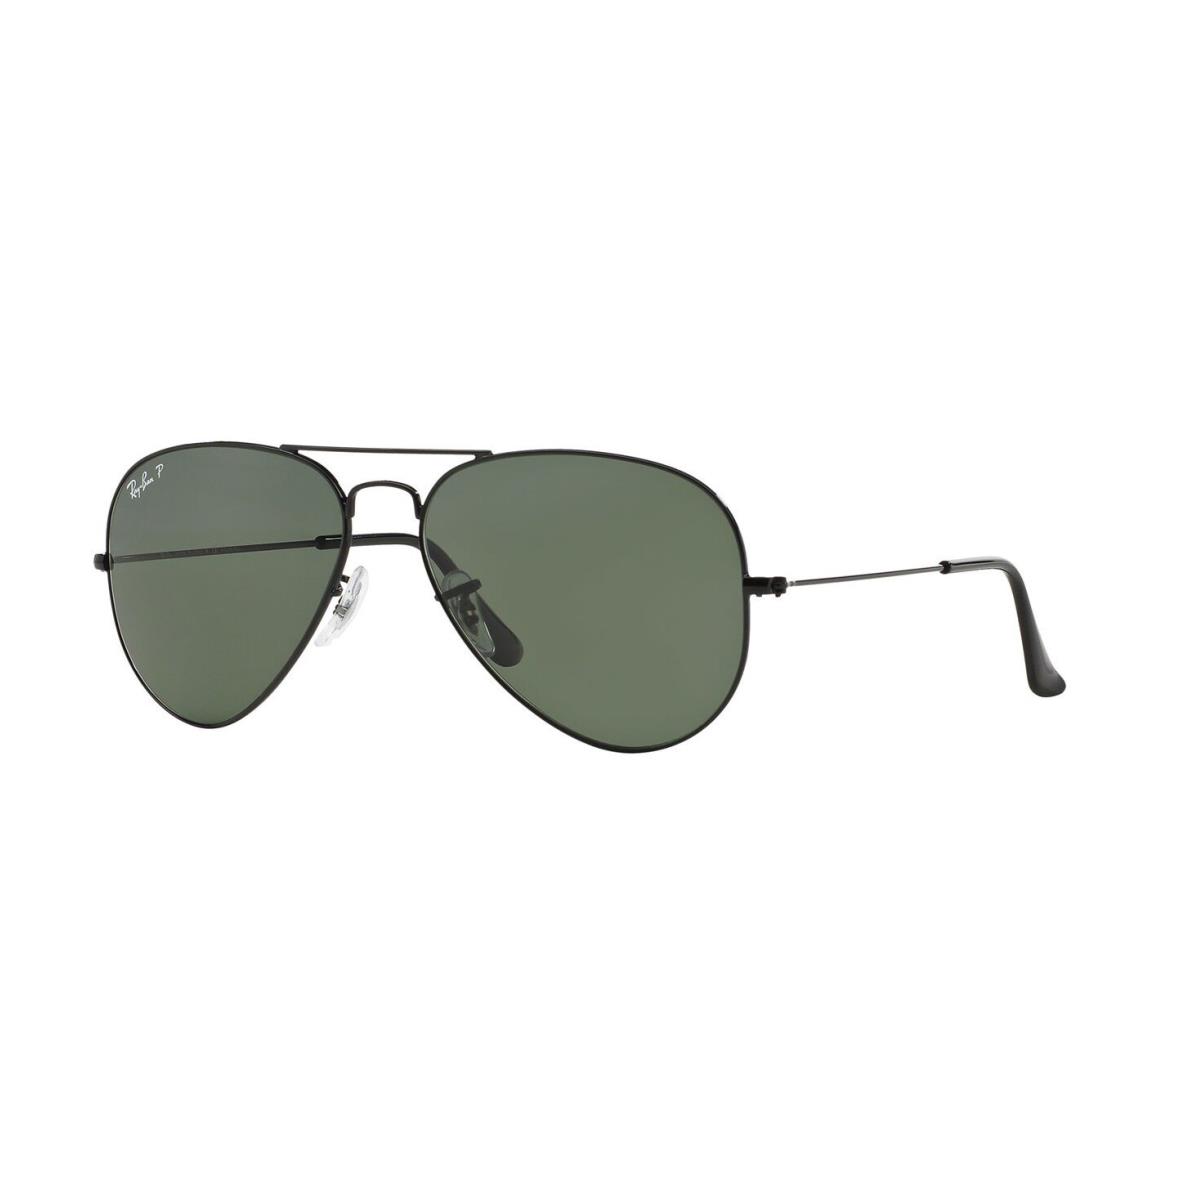 Ray Ban Fashion Aviator RB3025 002/58 Black Polarized Green Sunglasses - Black Frame, Green Lens